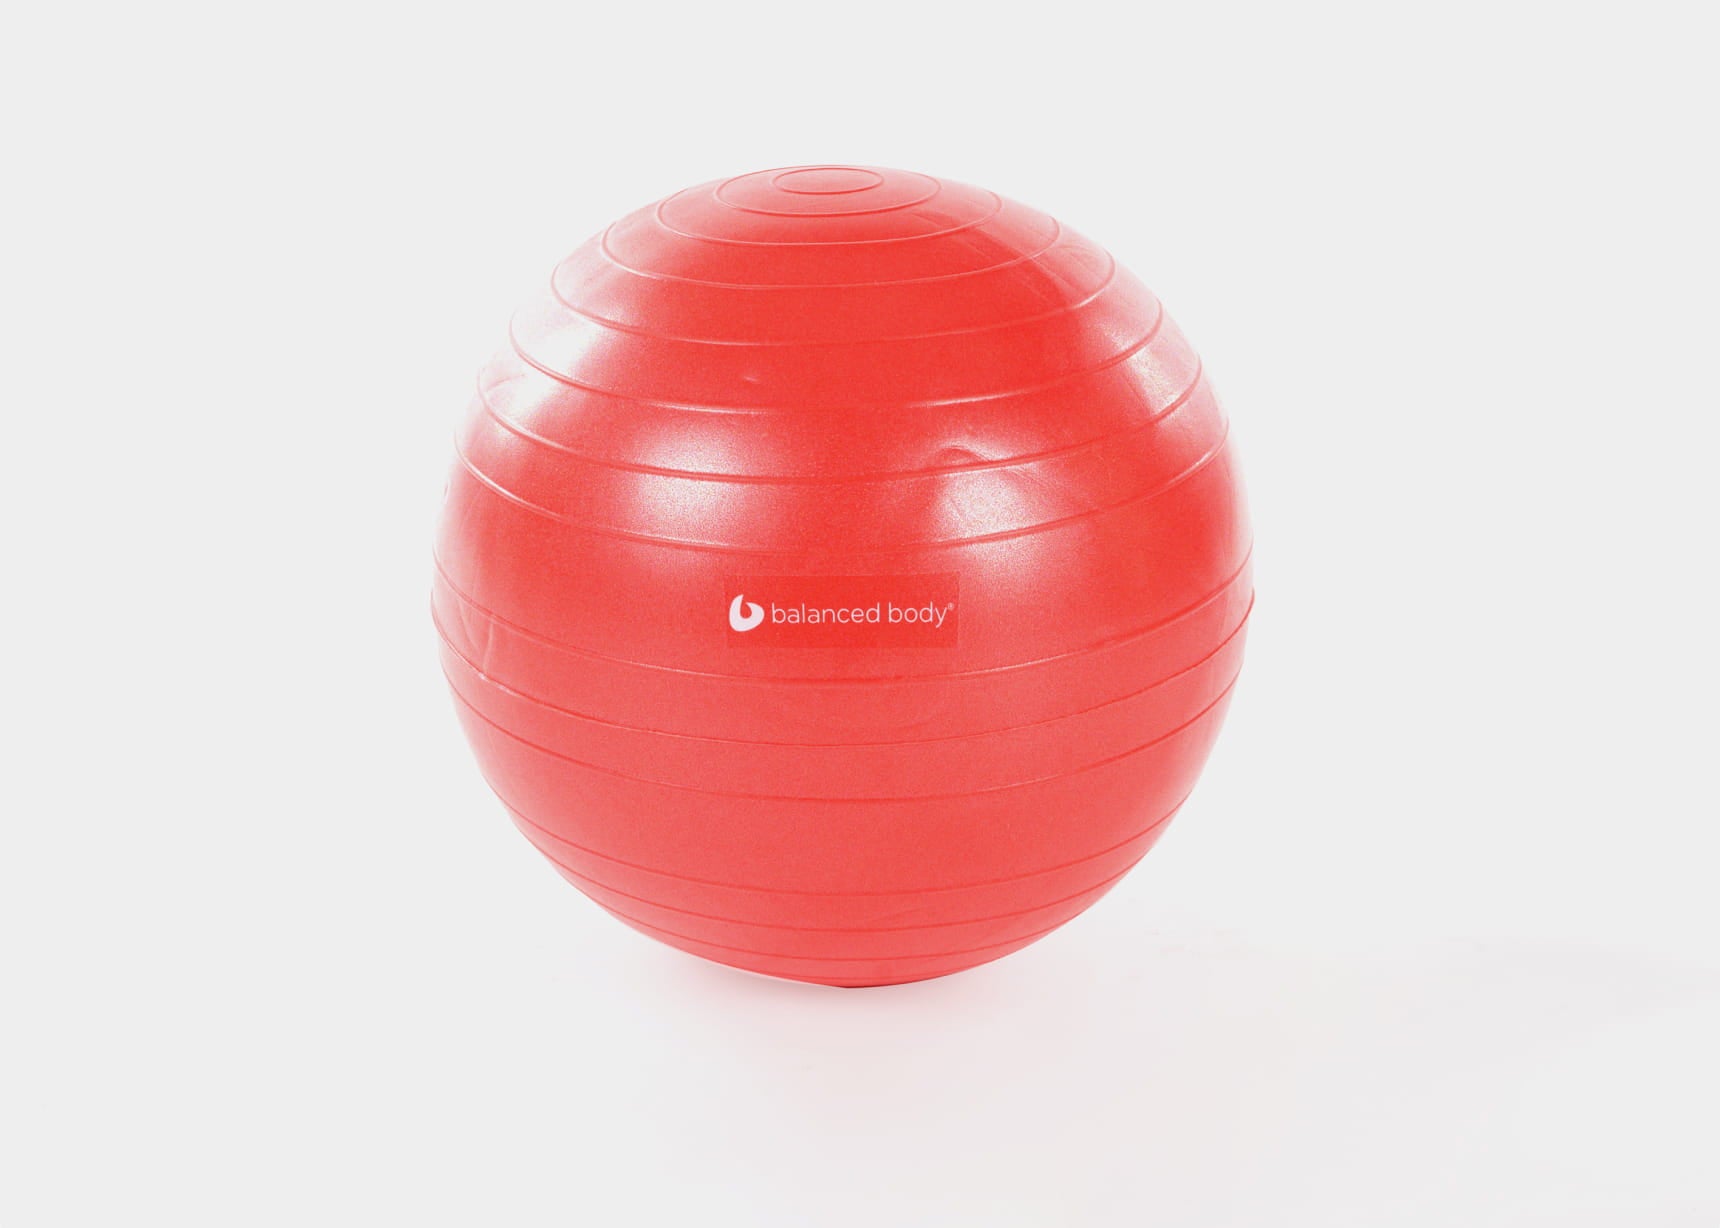 Unbranded 95CM Exercise Ball for Fitness Pilates Stability Balance Yoga  Ball Workout Anti Burst Exercise Ball (Purple) 